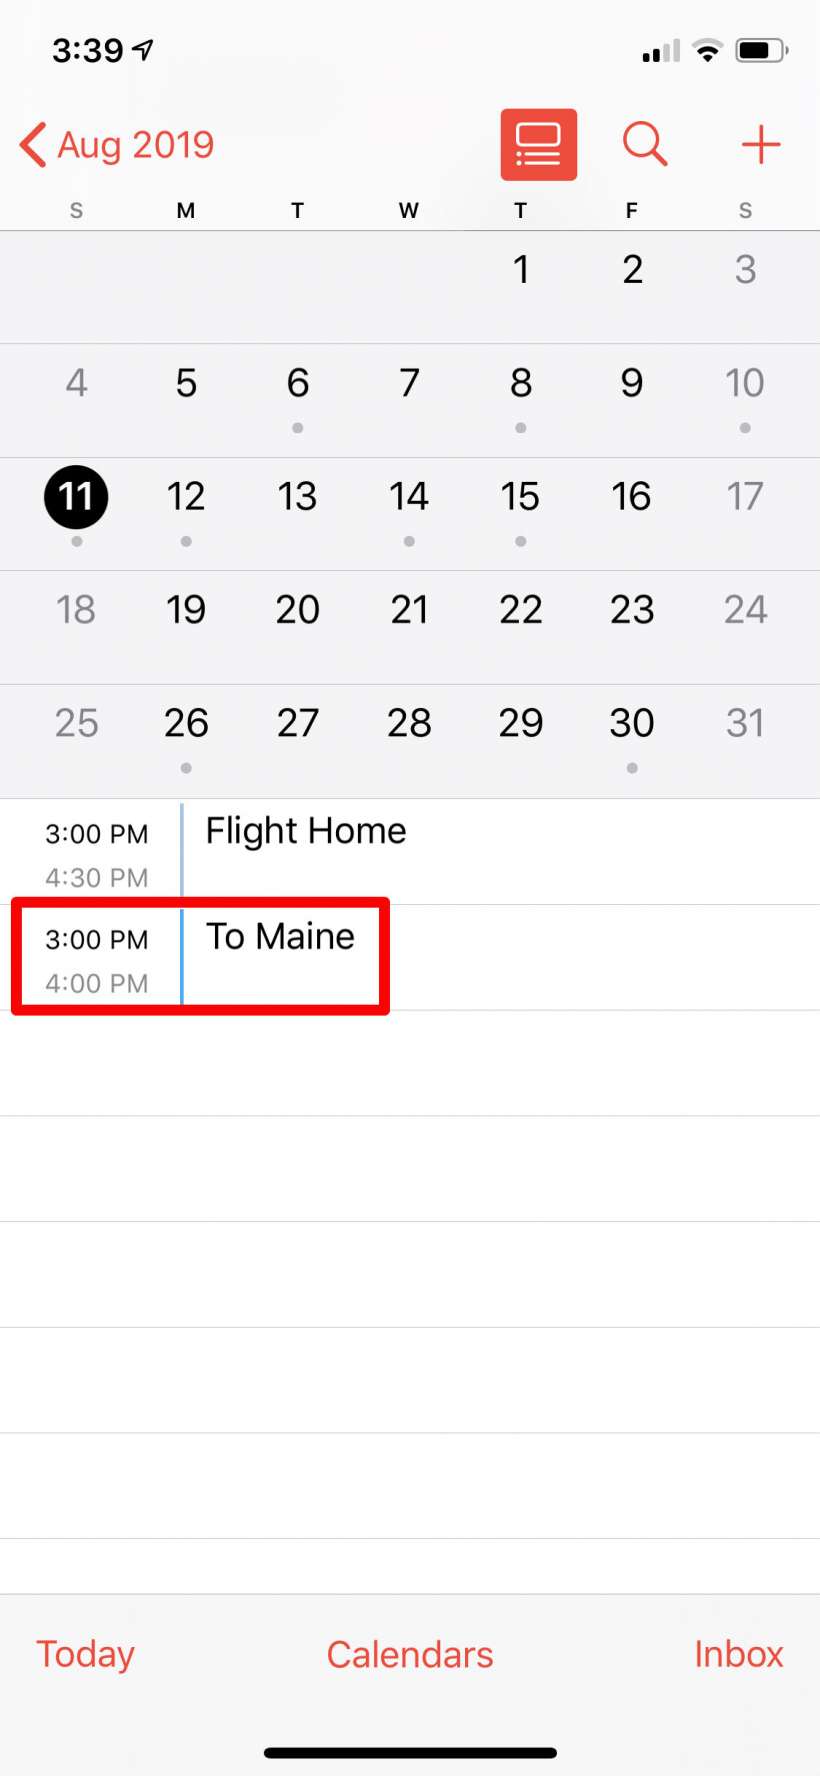 Cara melampirkan dokumen ke acara Kalender Anda di iPhone dan iPad.